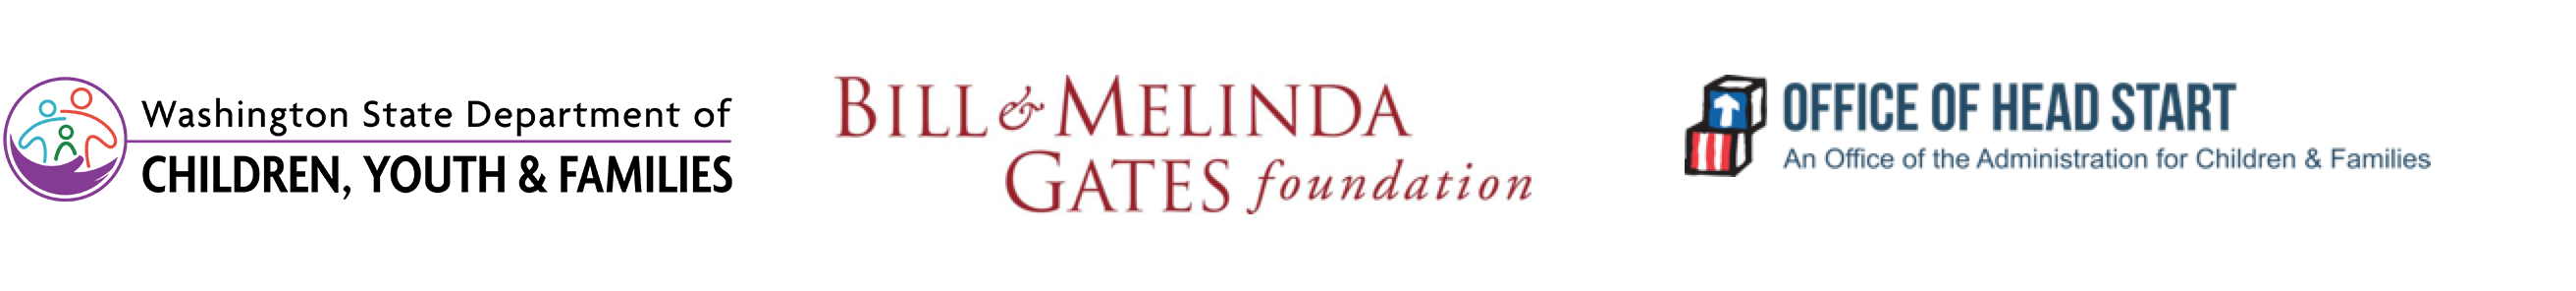 Bill and Melinda Gates Foundation, WA DCYF, Office of Headstart Logos